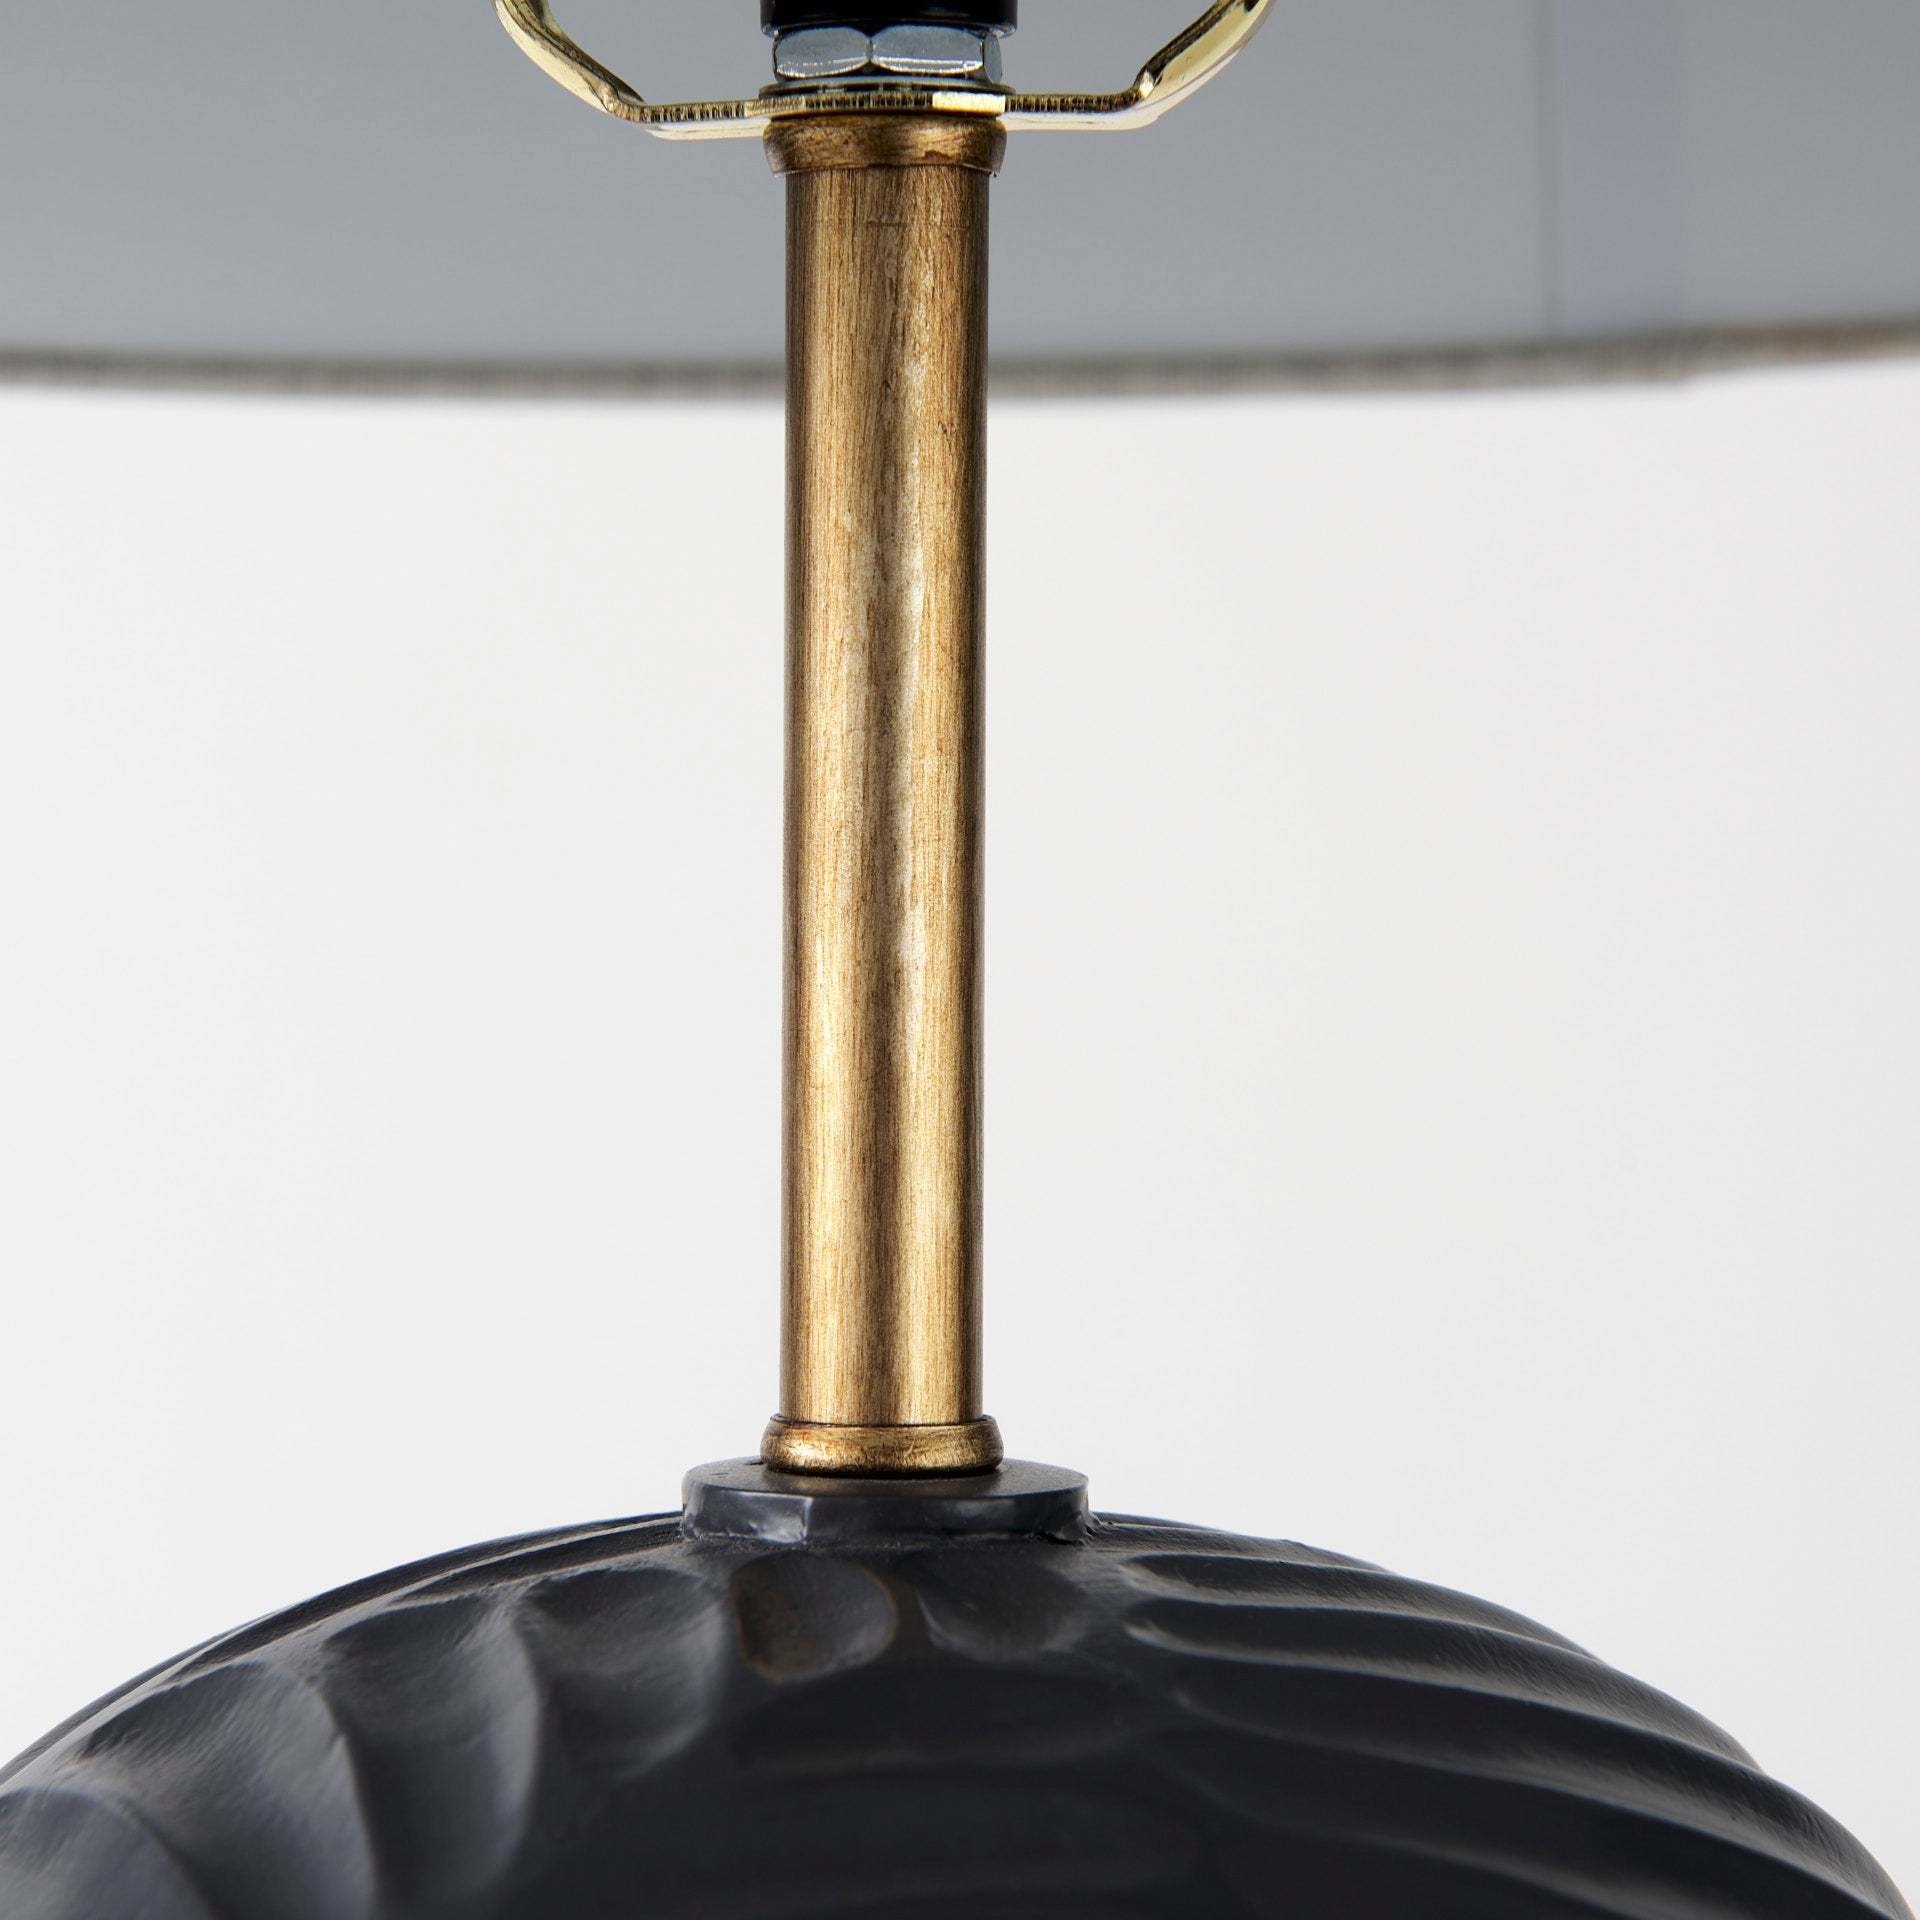 Zara Table Lamp